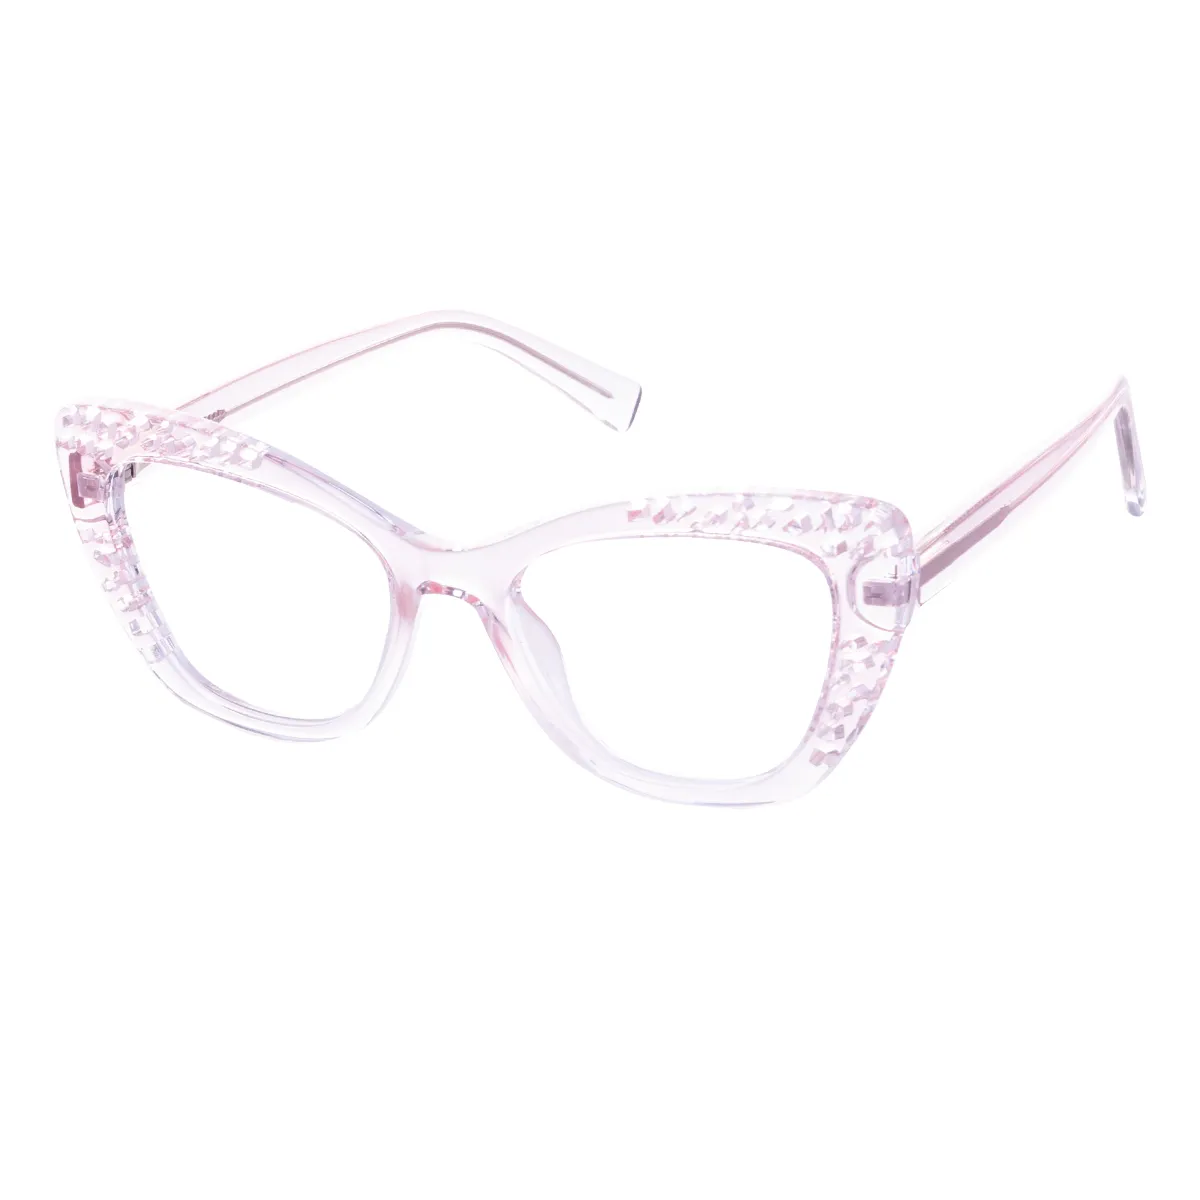 Sum - Cat-eye Translucent-pink Glasses for Women